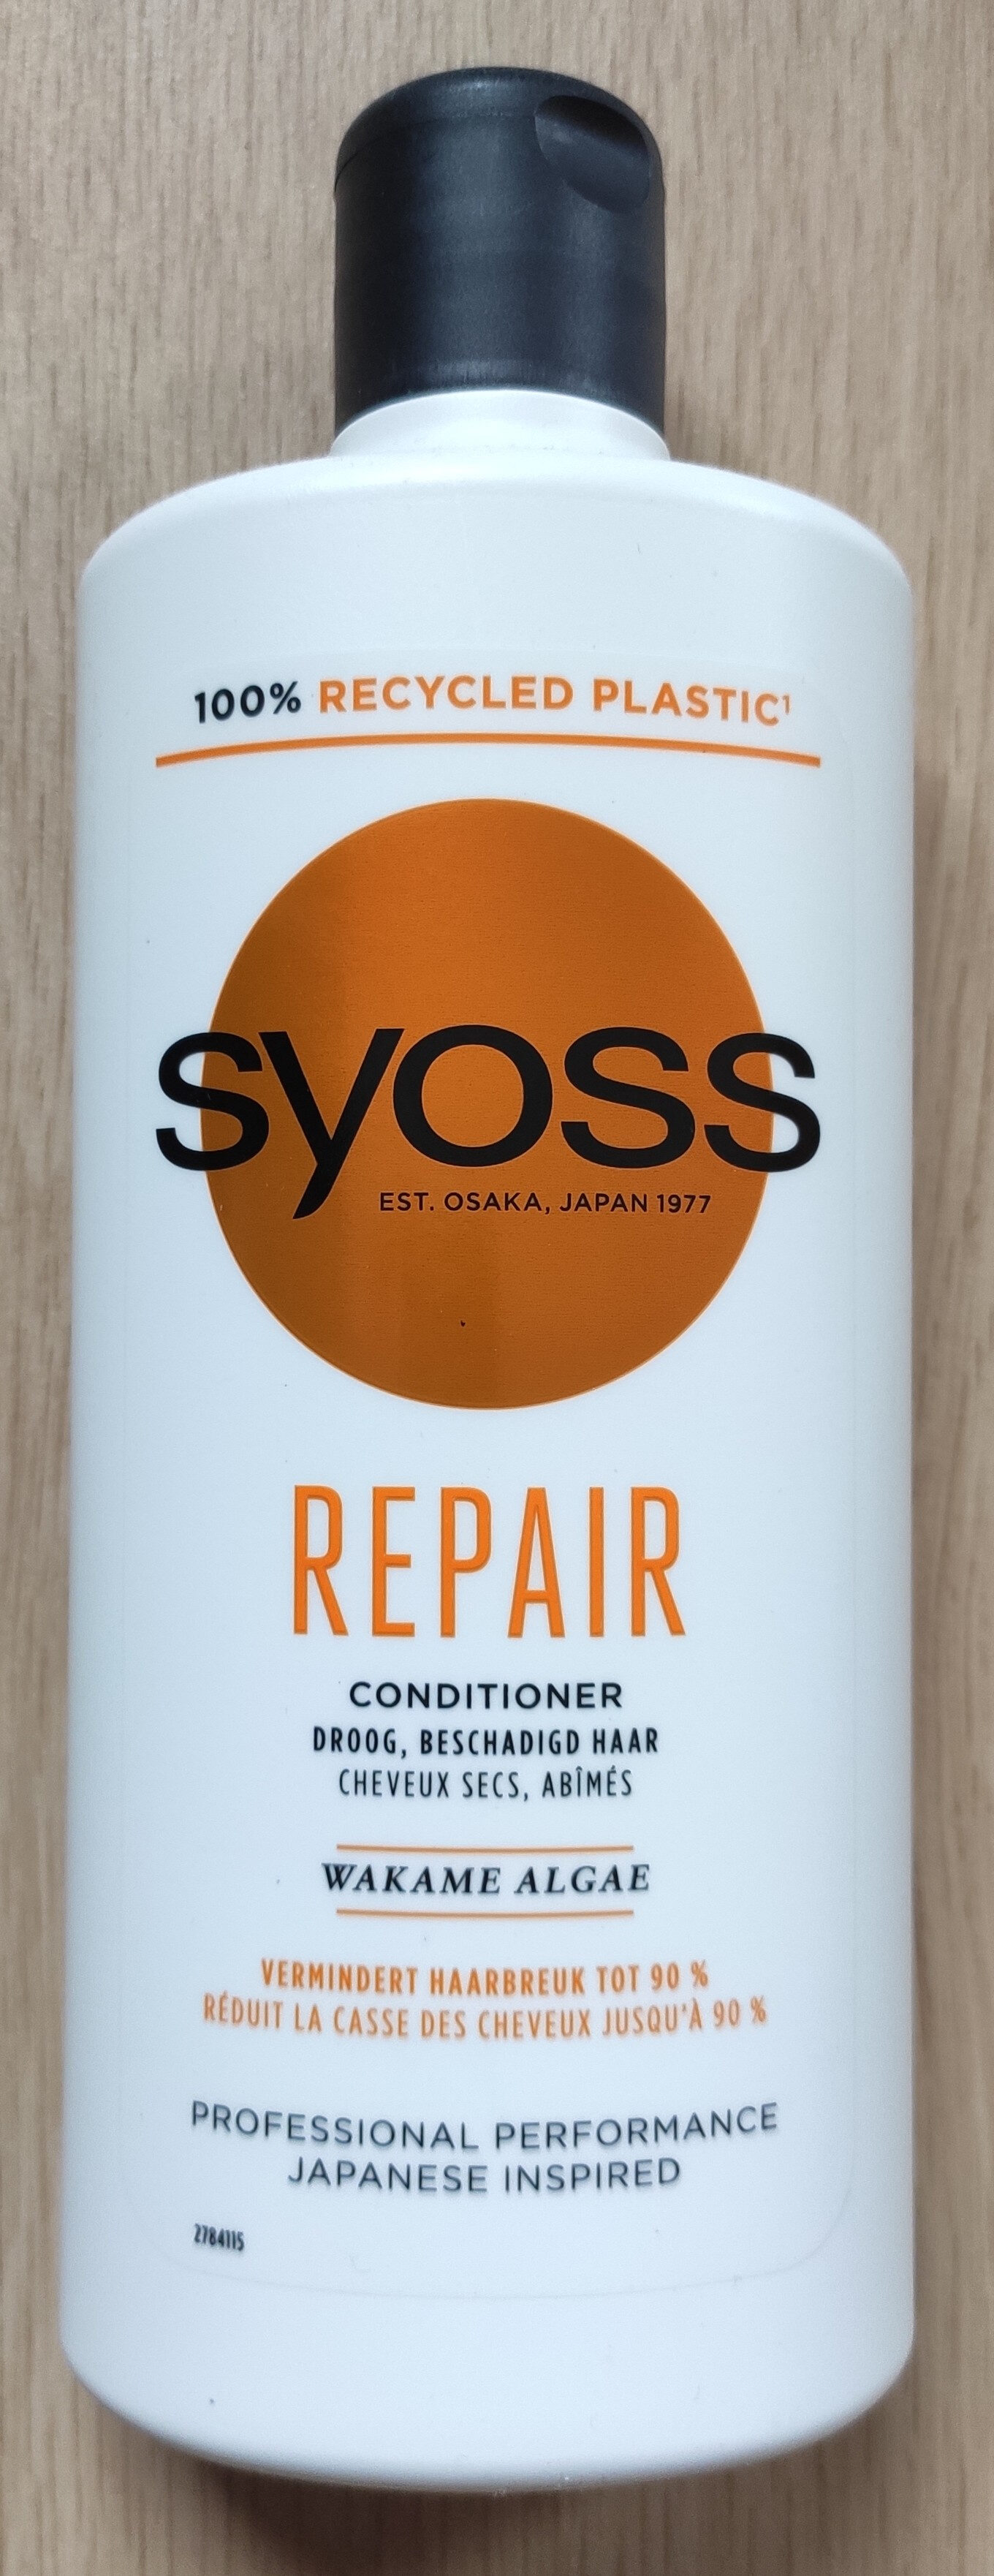 Syoss Repair Wakame Algae - Product - fr